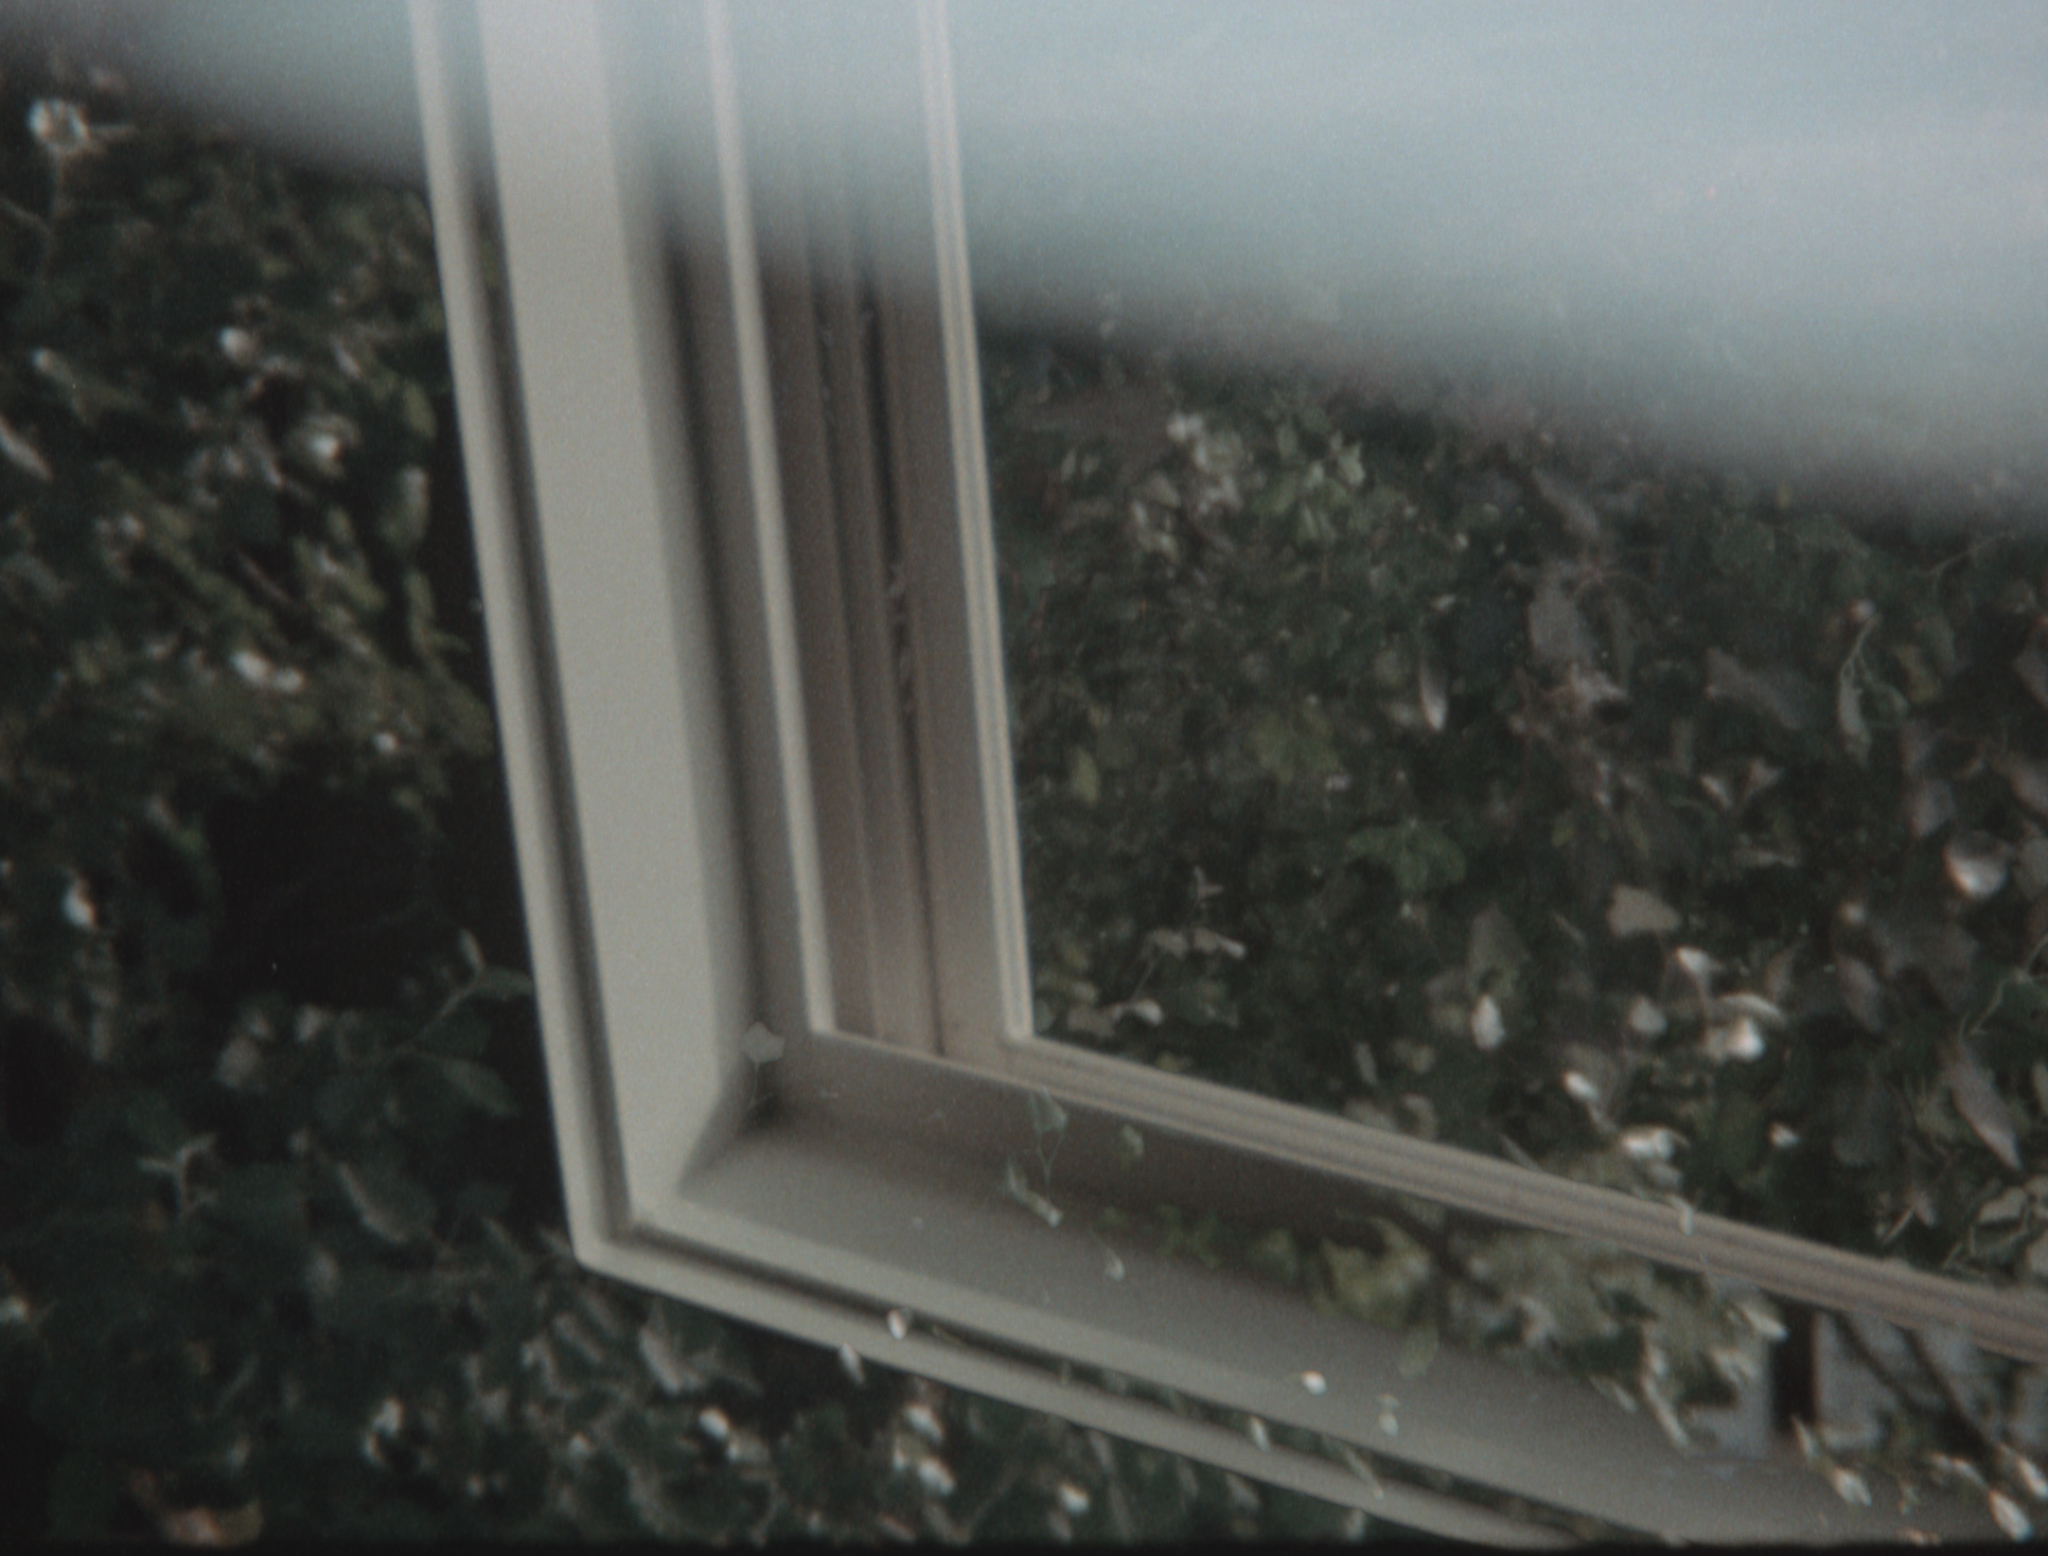 John Warren, Vestige, (video still), 16mm film, 2015